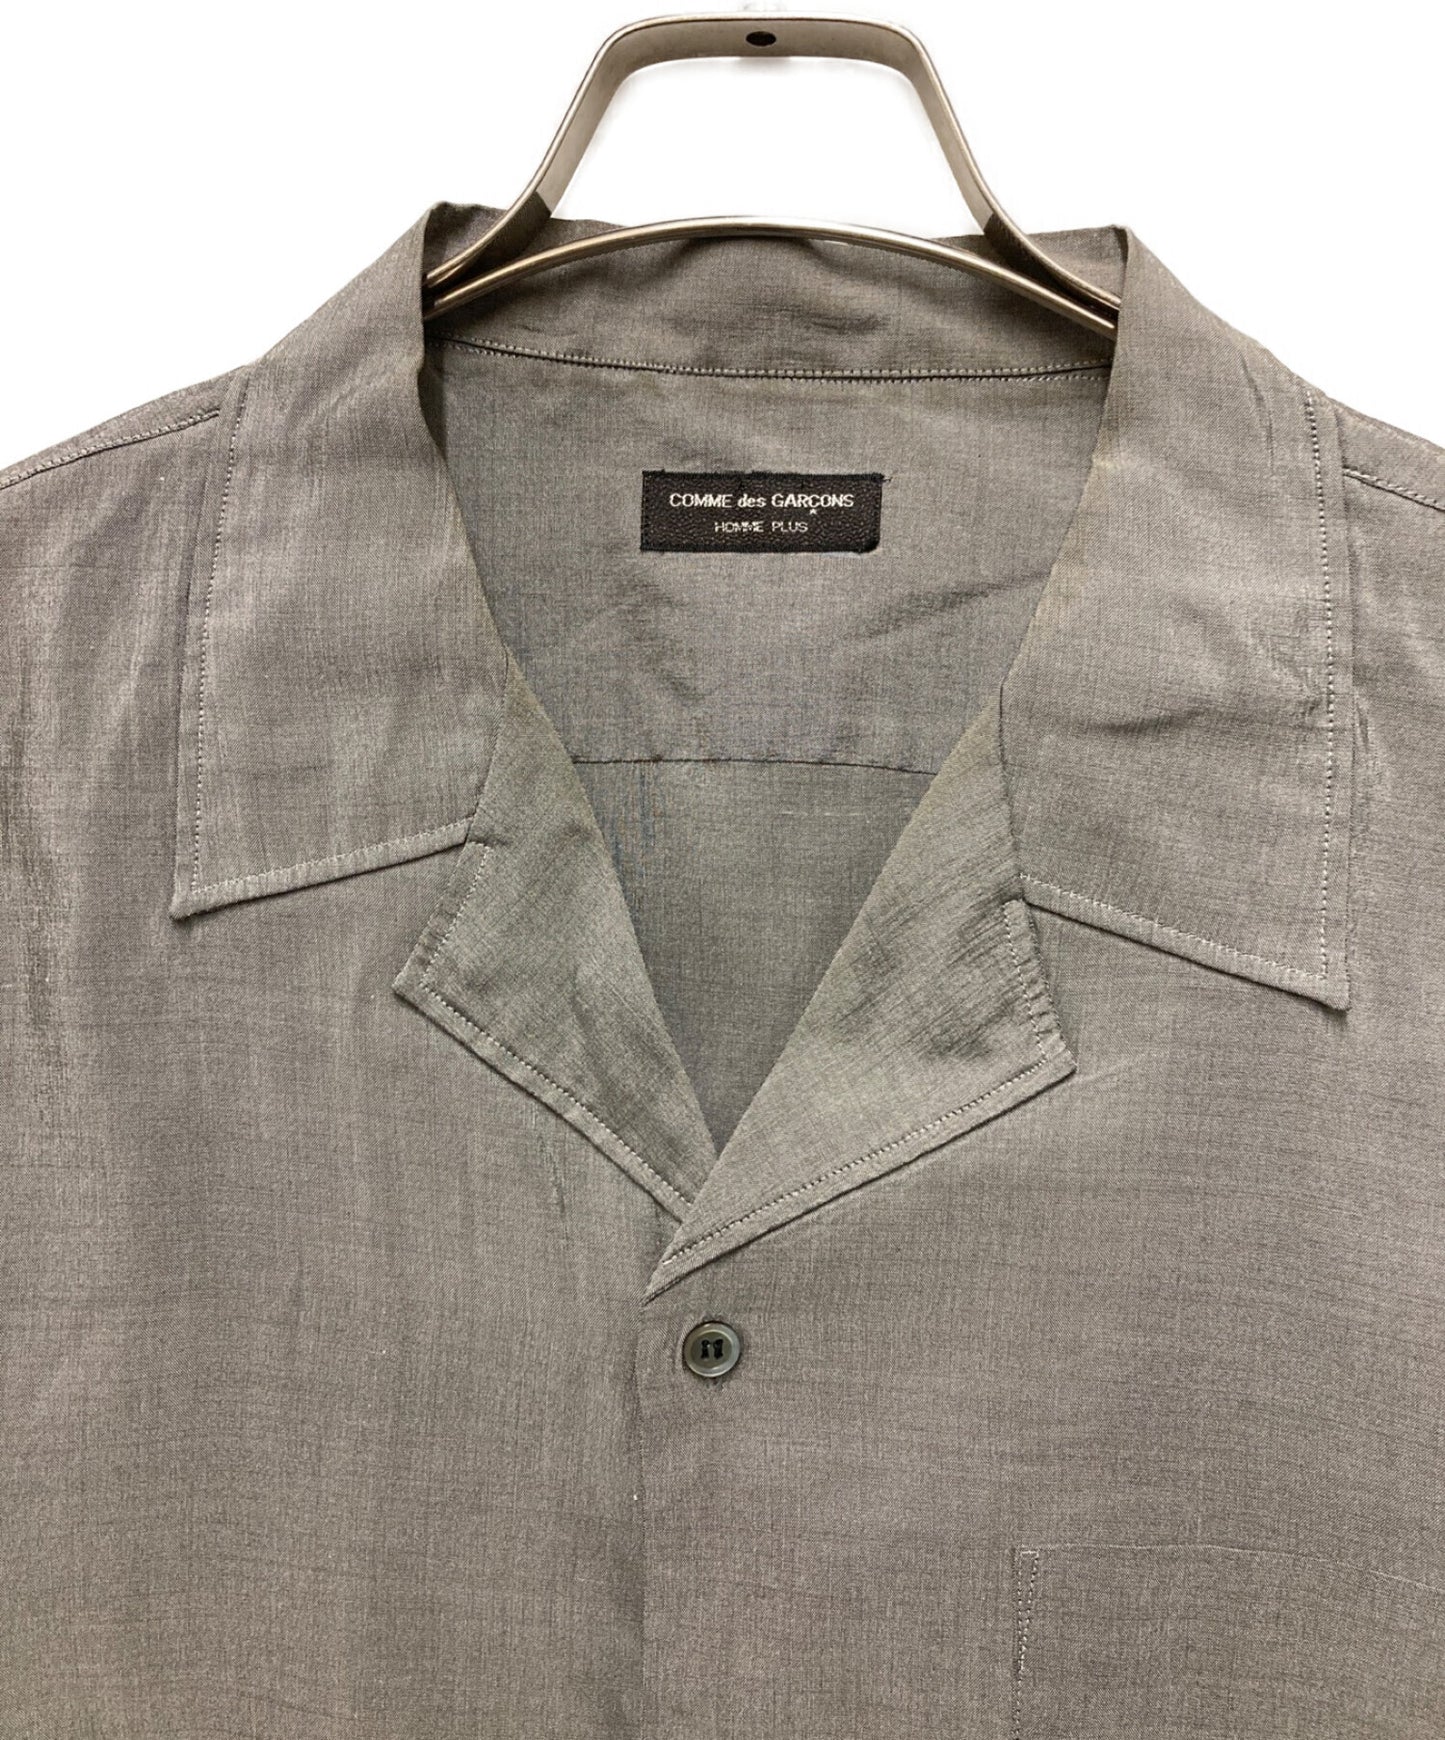 Comme des Garcons Homme Plus真絲Poly Open Collar襯衫AD1997檔案項圈縫製設計PB-100130